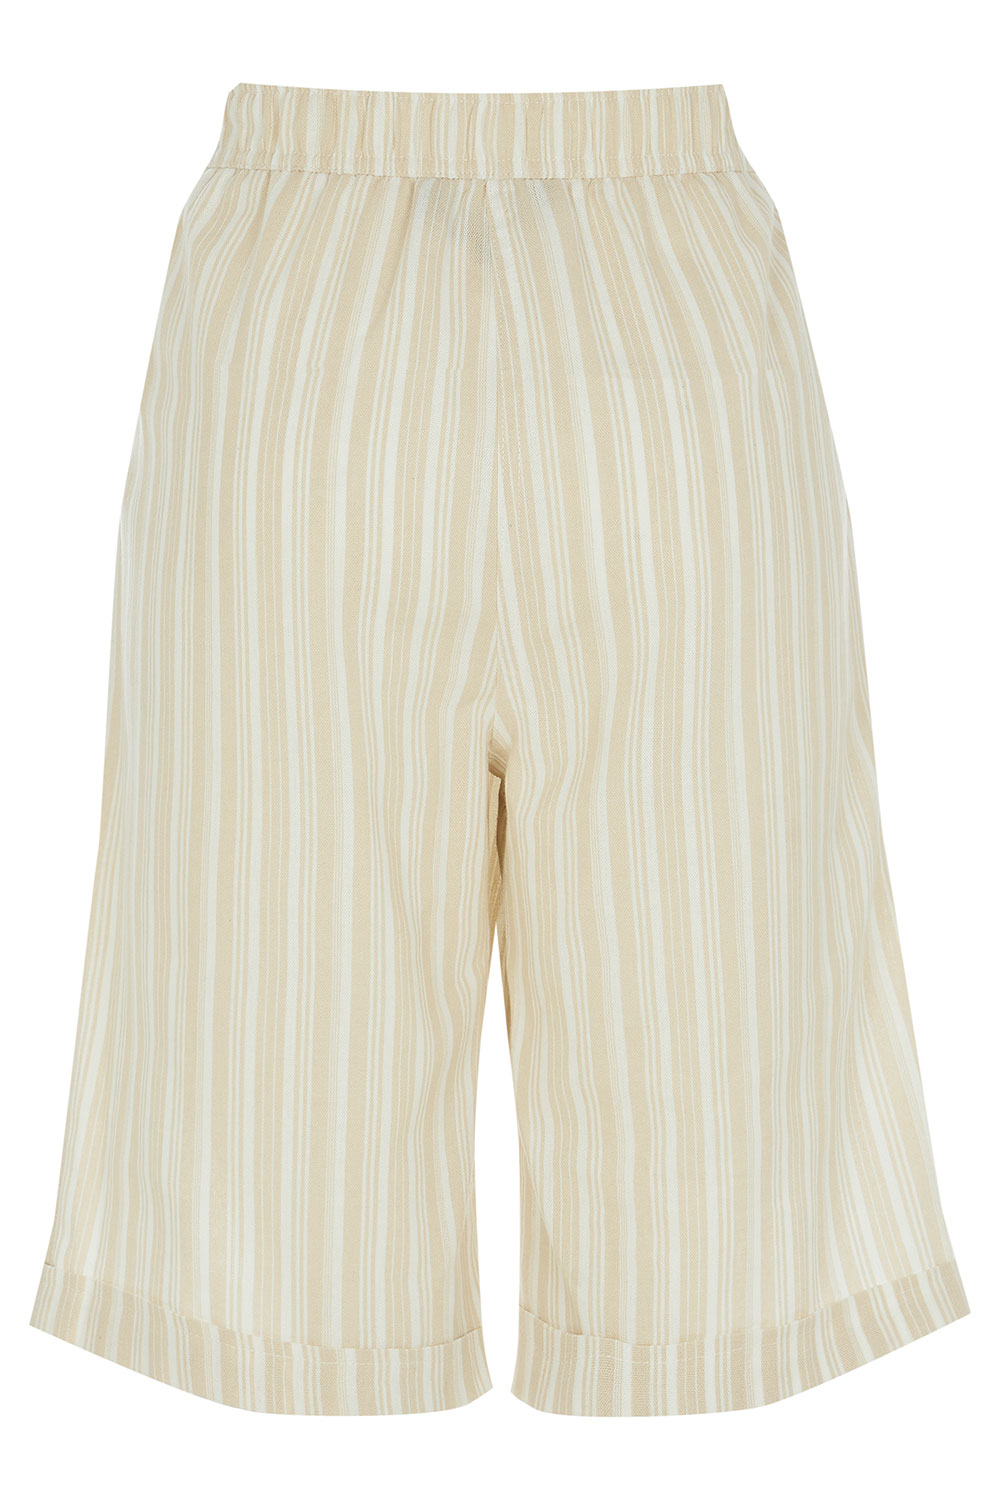 Striped Linen Shorts with Tie Waist | Bonmarché